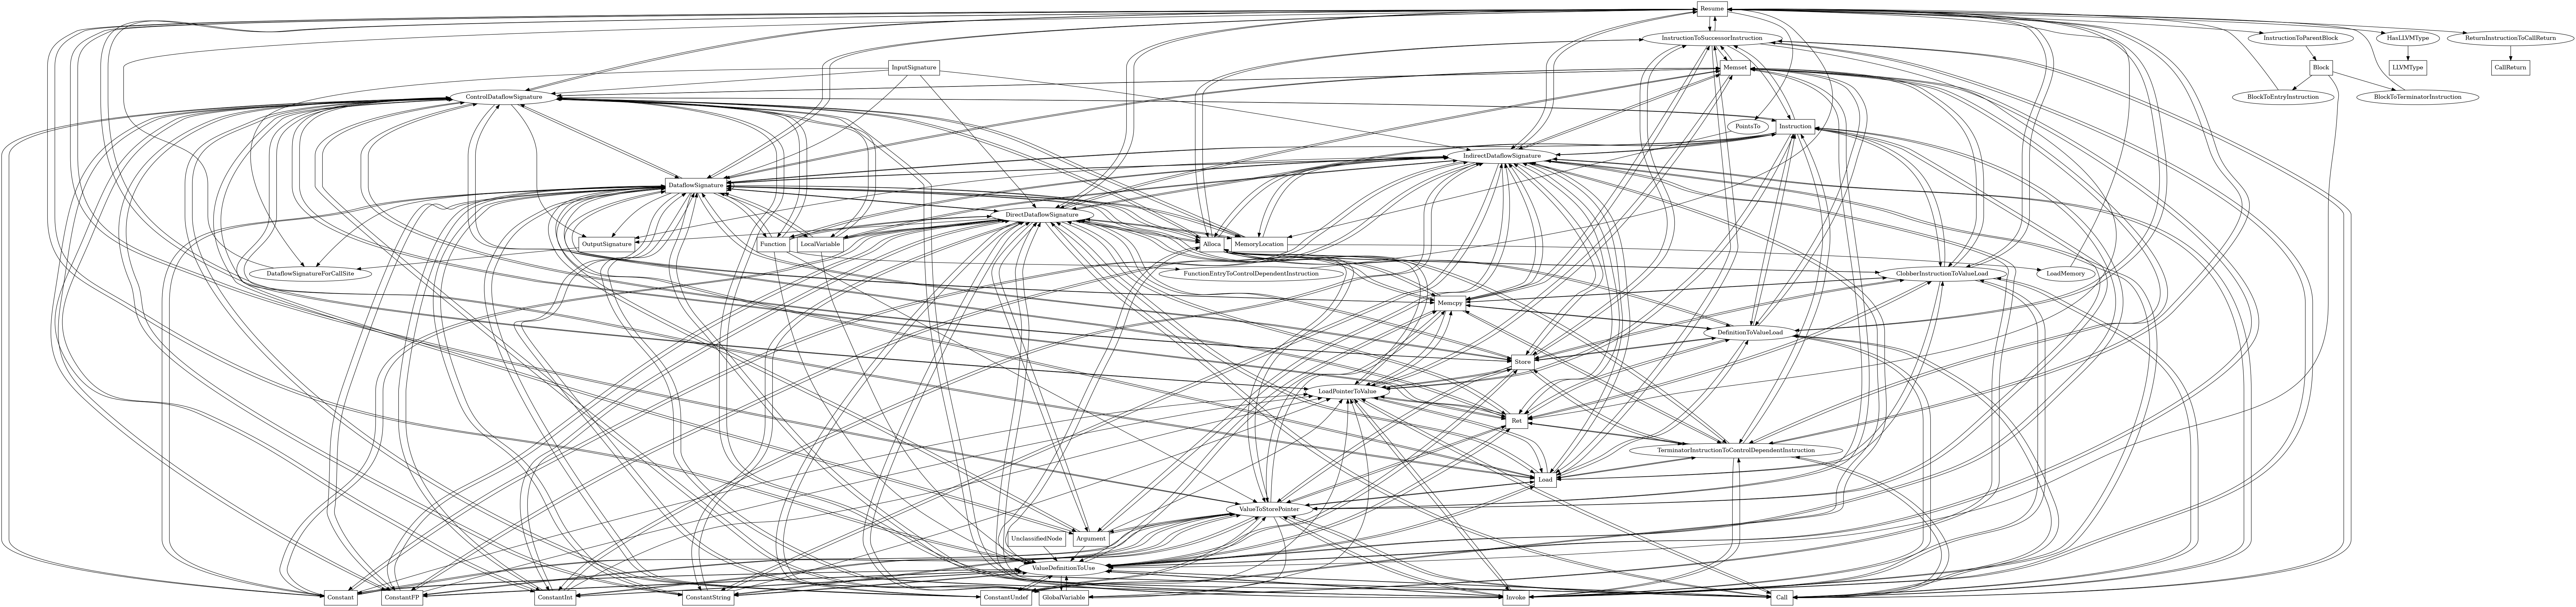 Entity-relationship diagram for Resume nodes